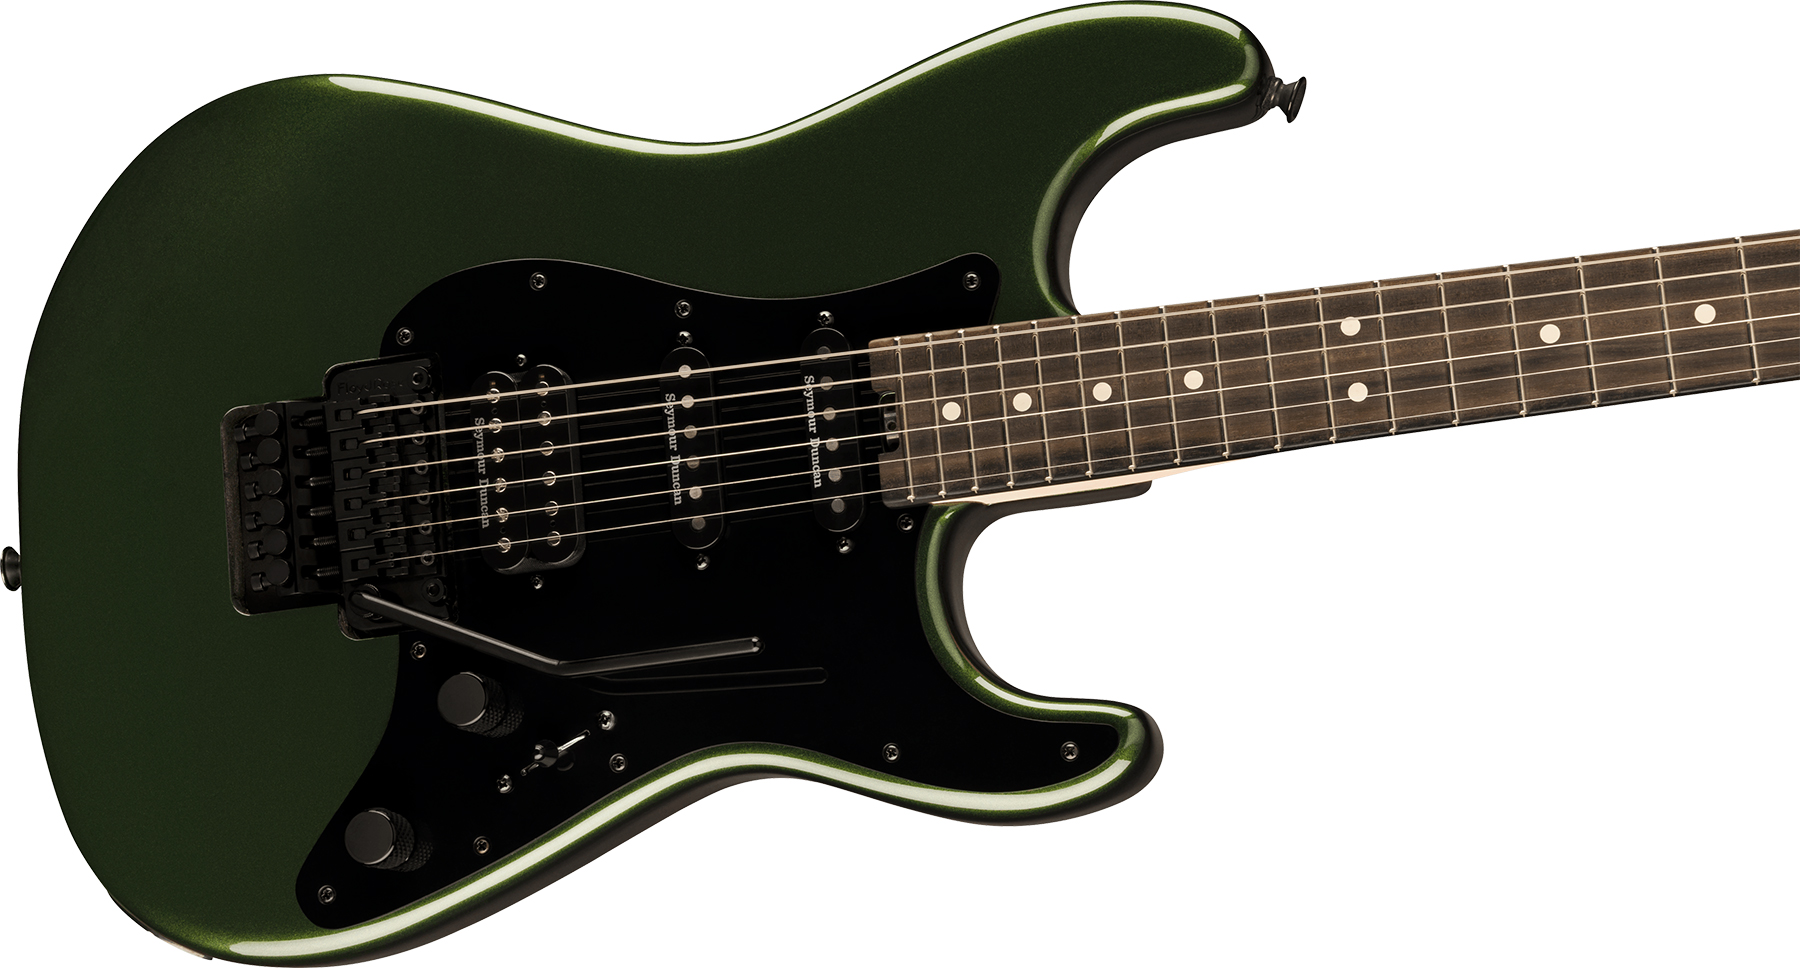 Charvel So-cal Style 1 Hss Fr E Pro-mod Seymour Duncan Eb - Lambo Green - Str shape electric guitar - Variation 2